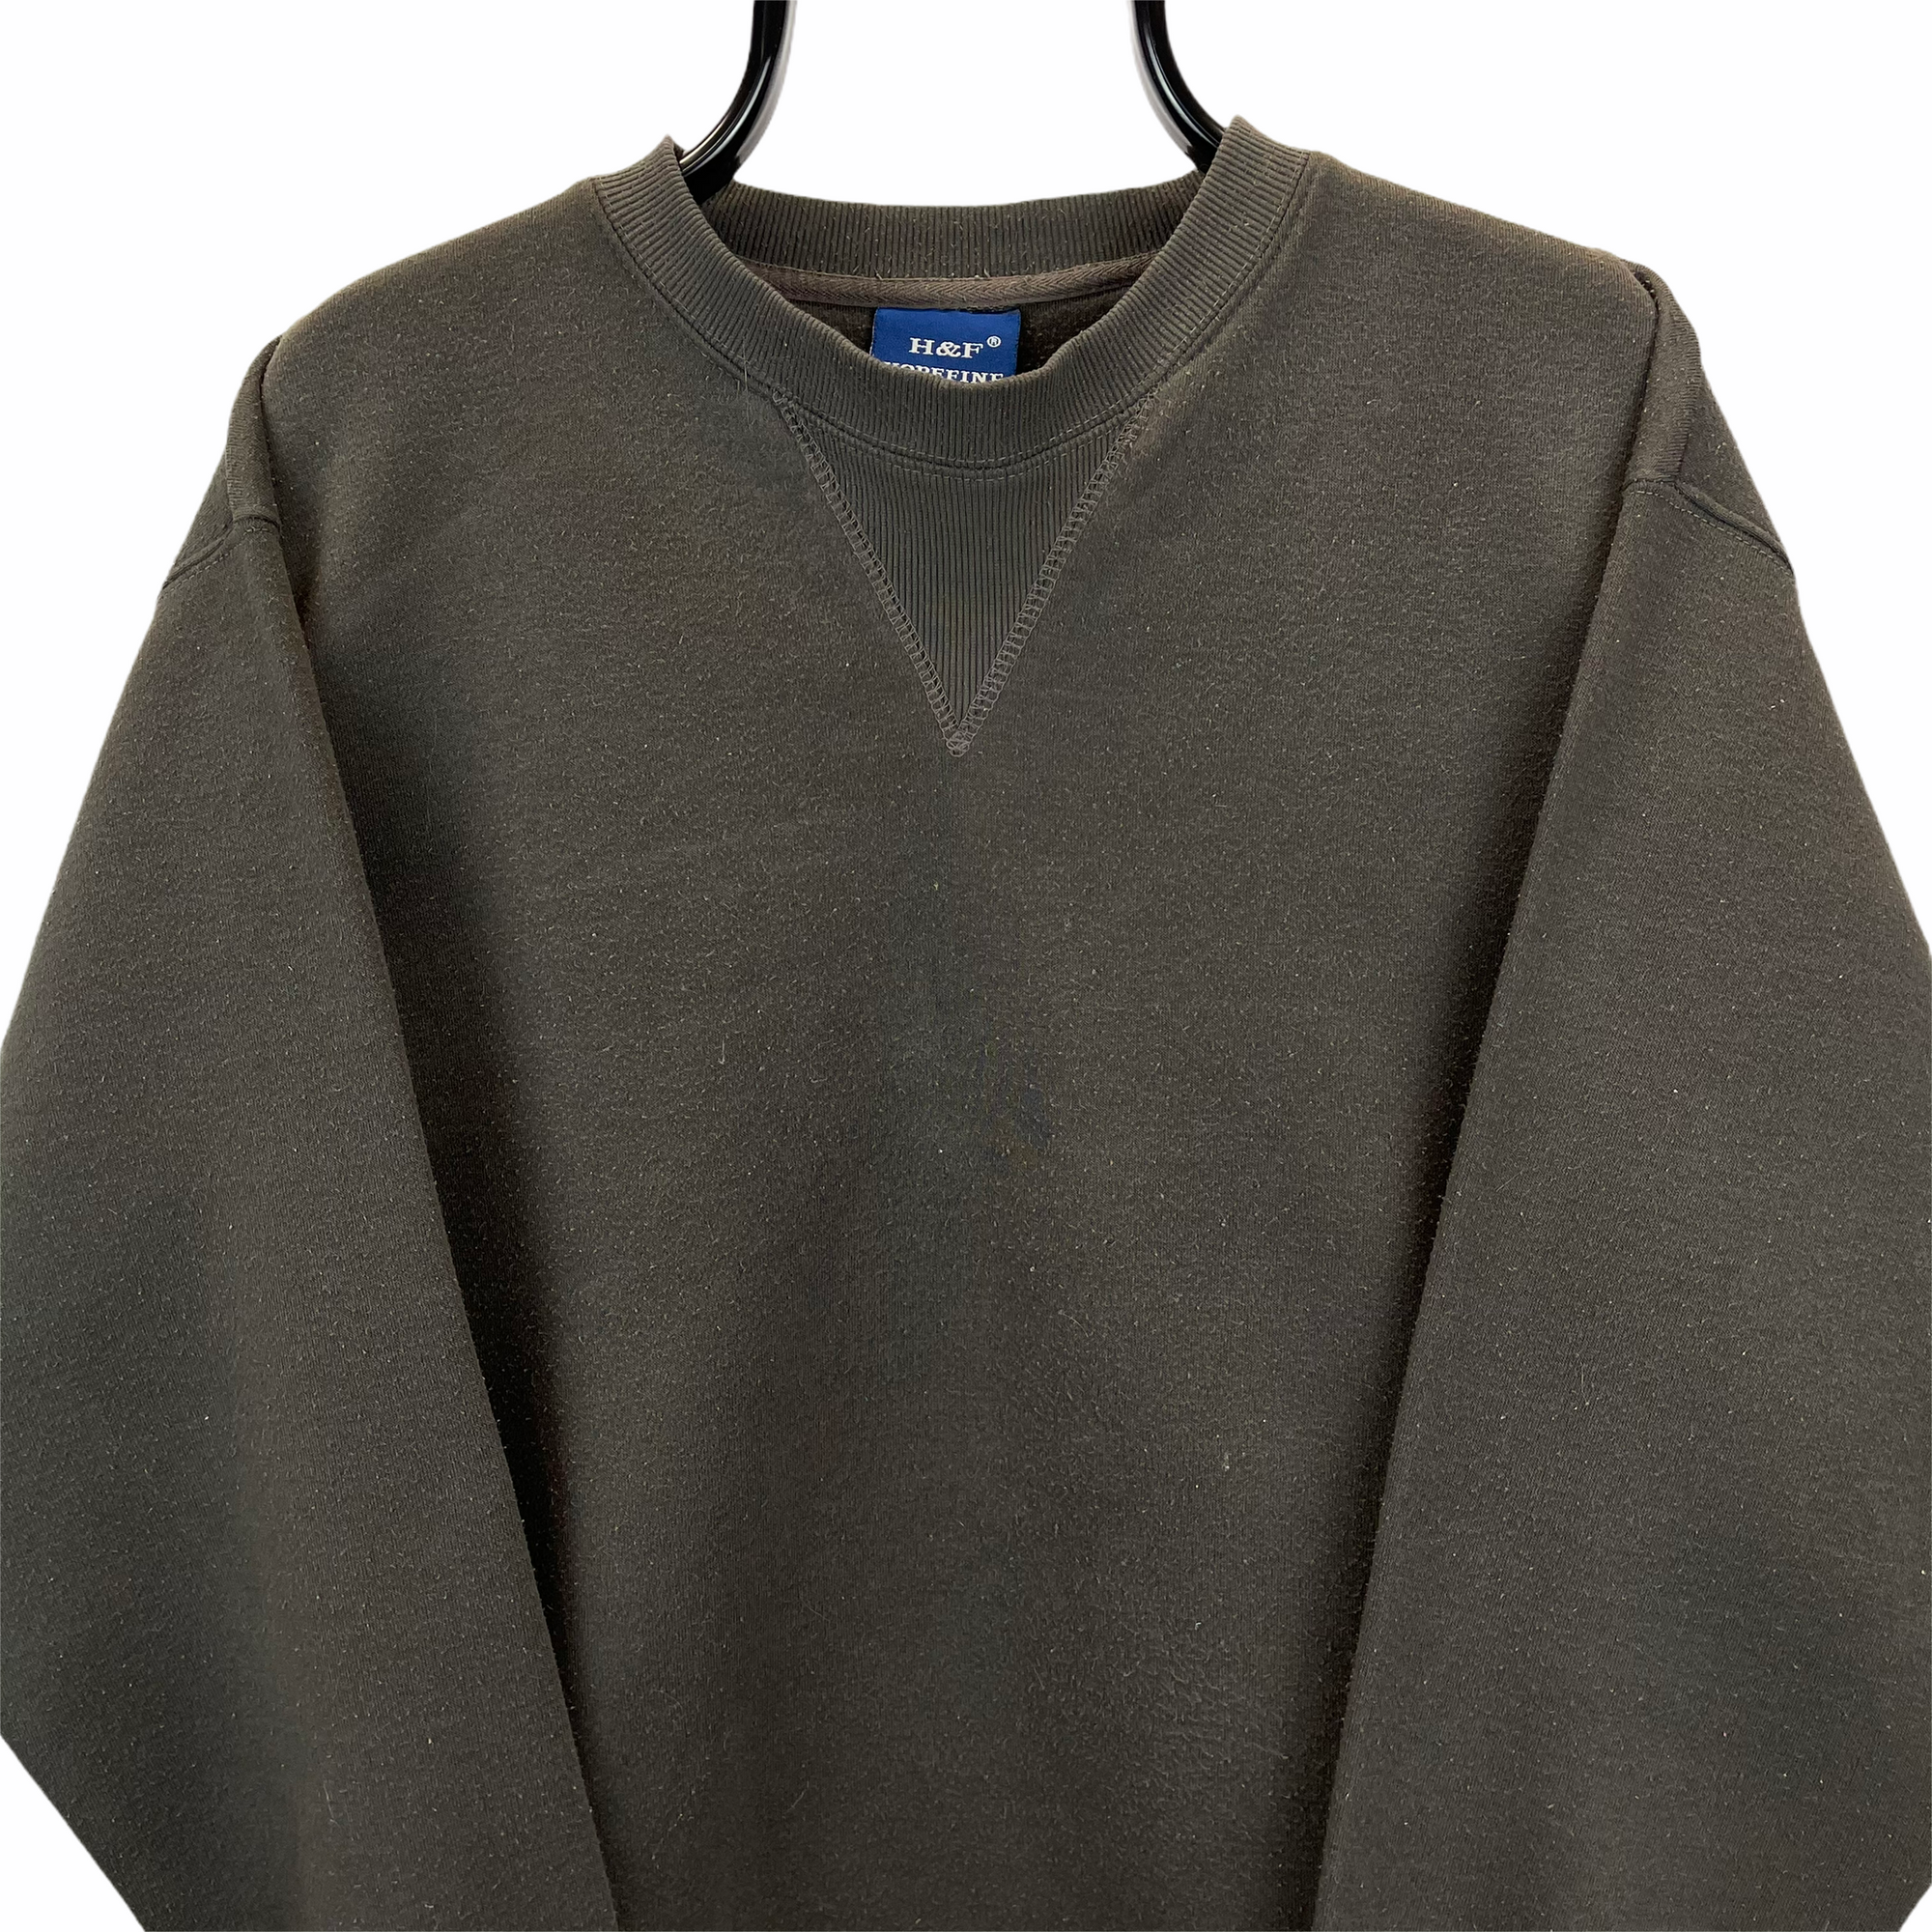 Vintage Plain Brown Sweatshirt - Men's Large/Women's XL